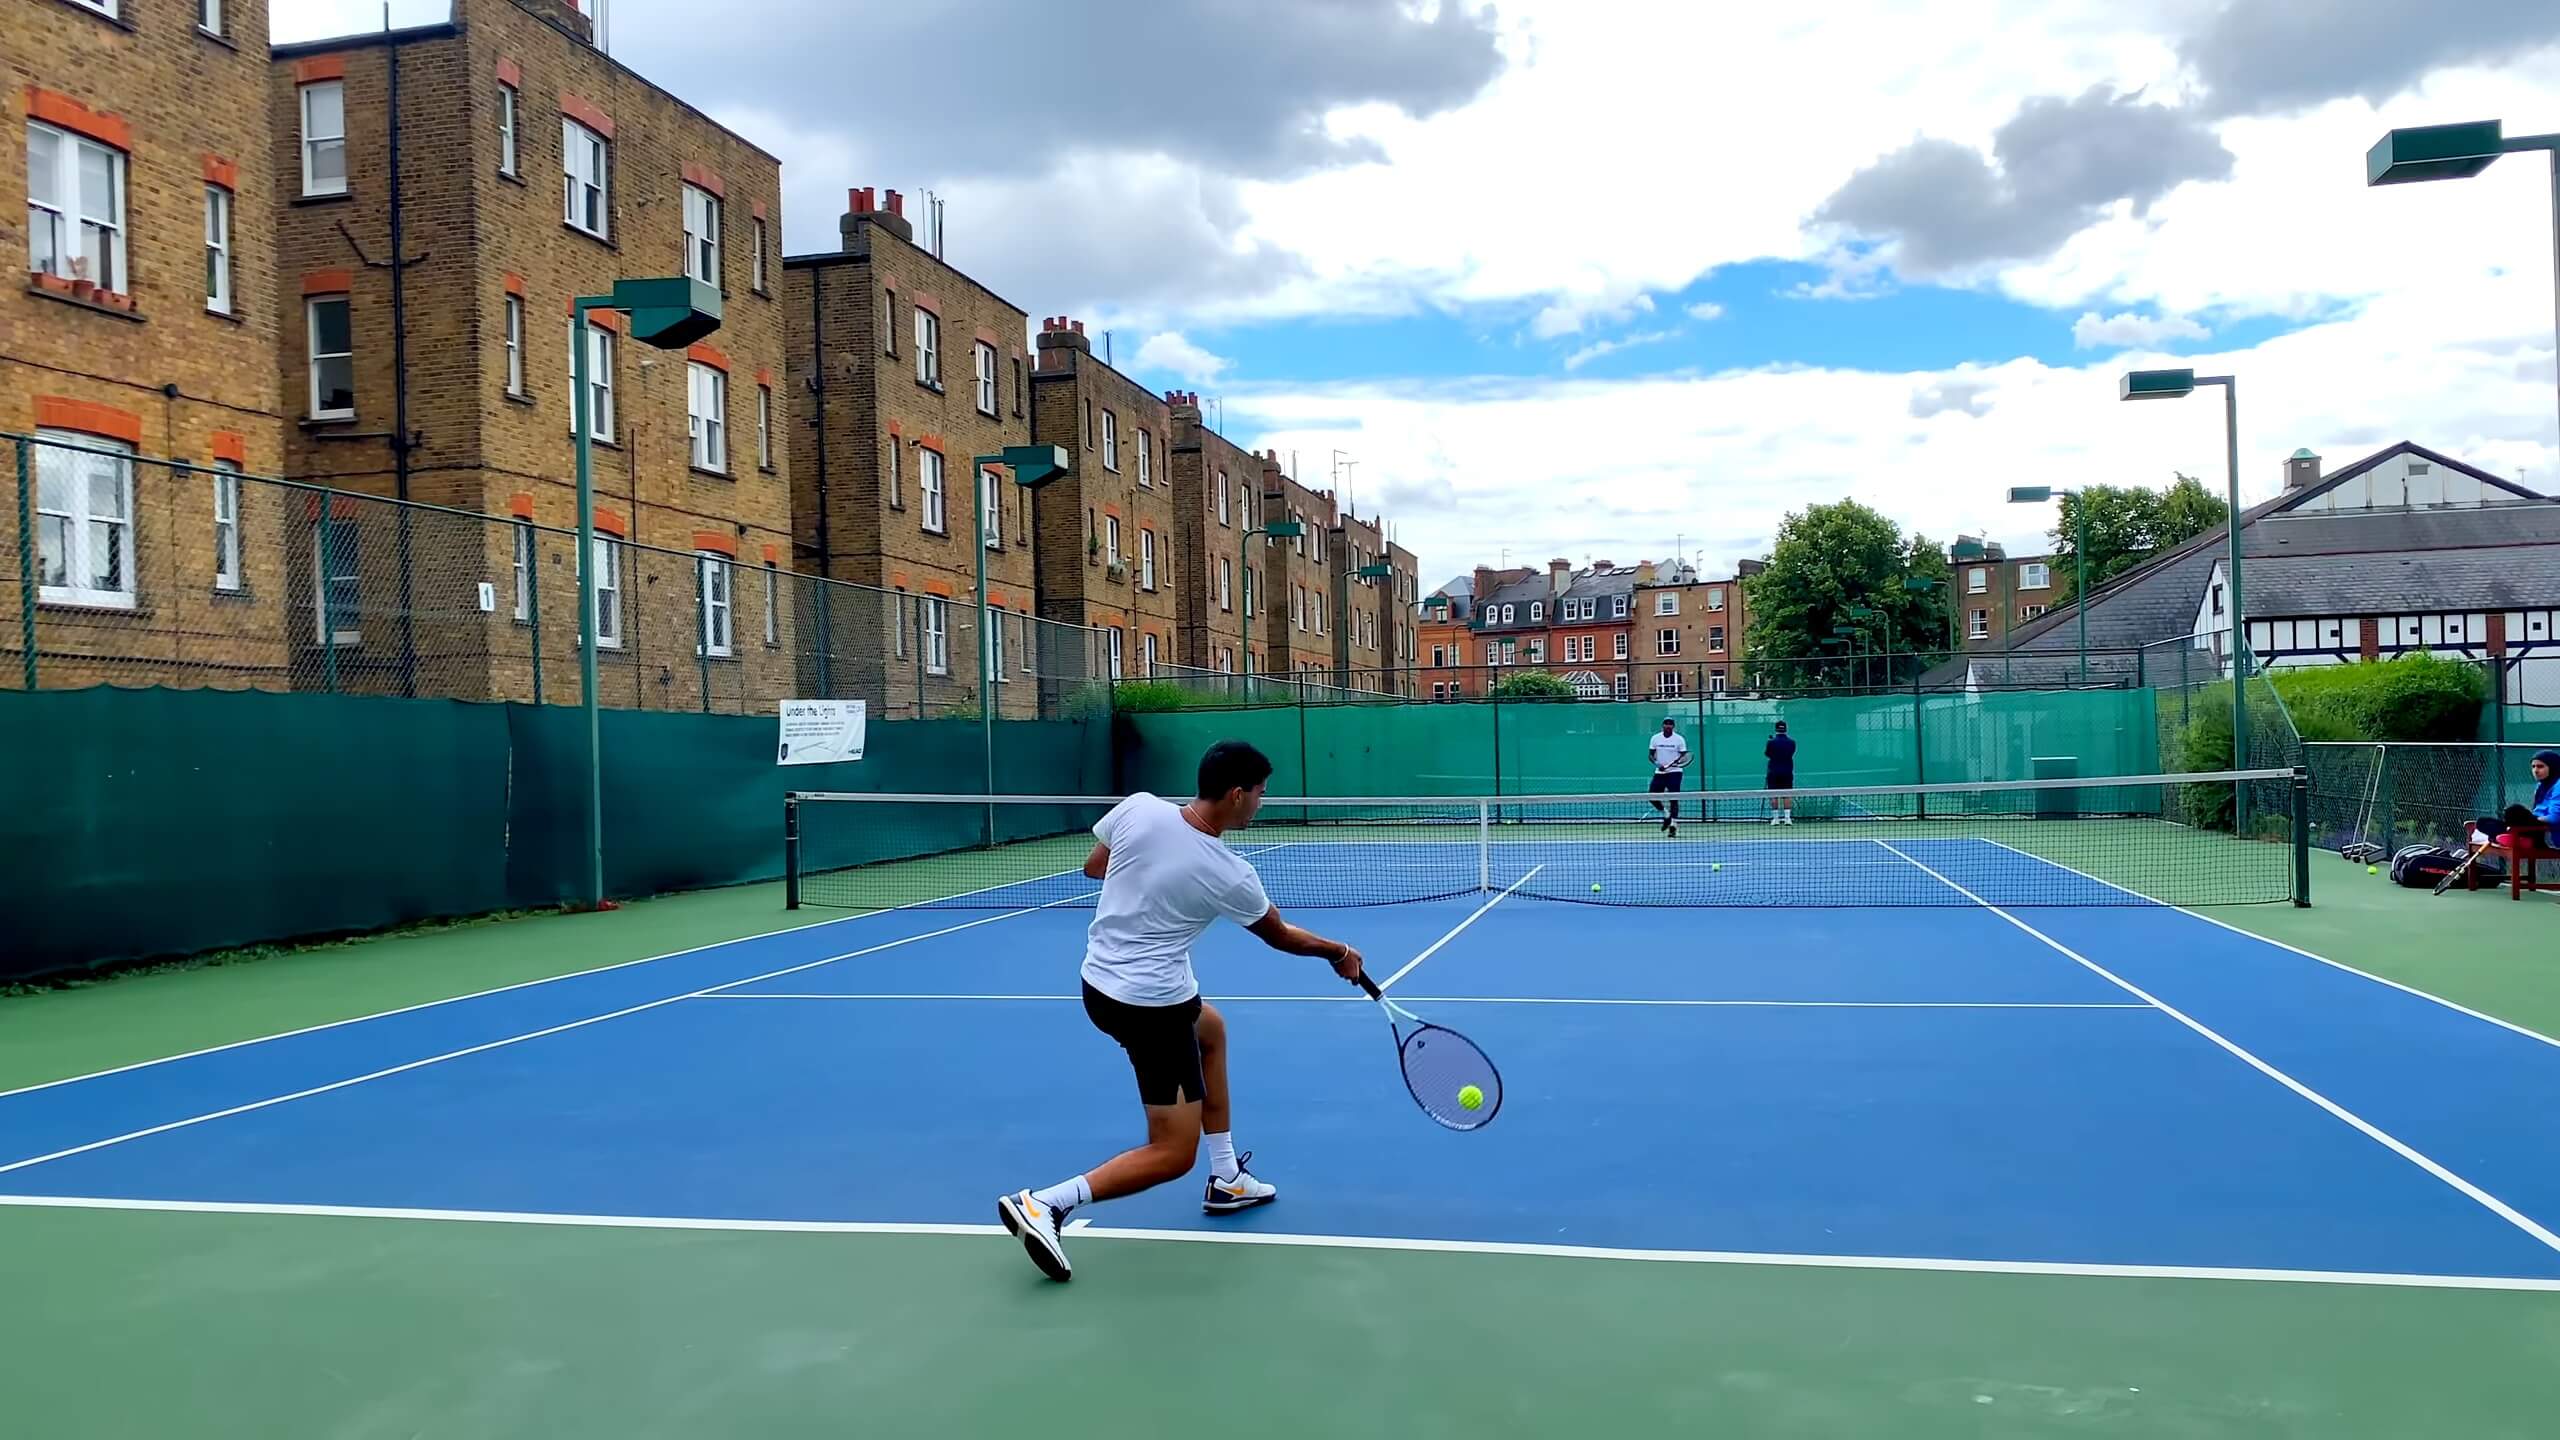 Play tennis at the hard Court or Asphalt